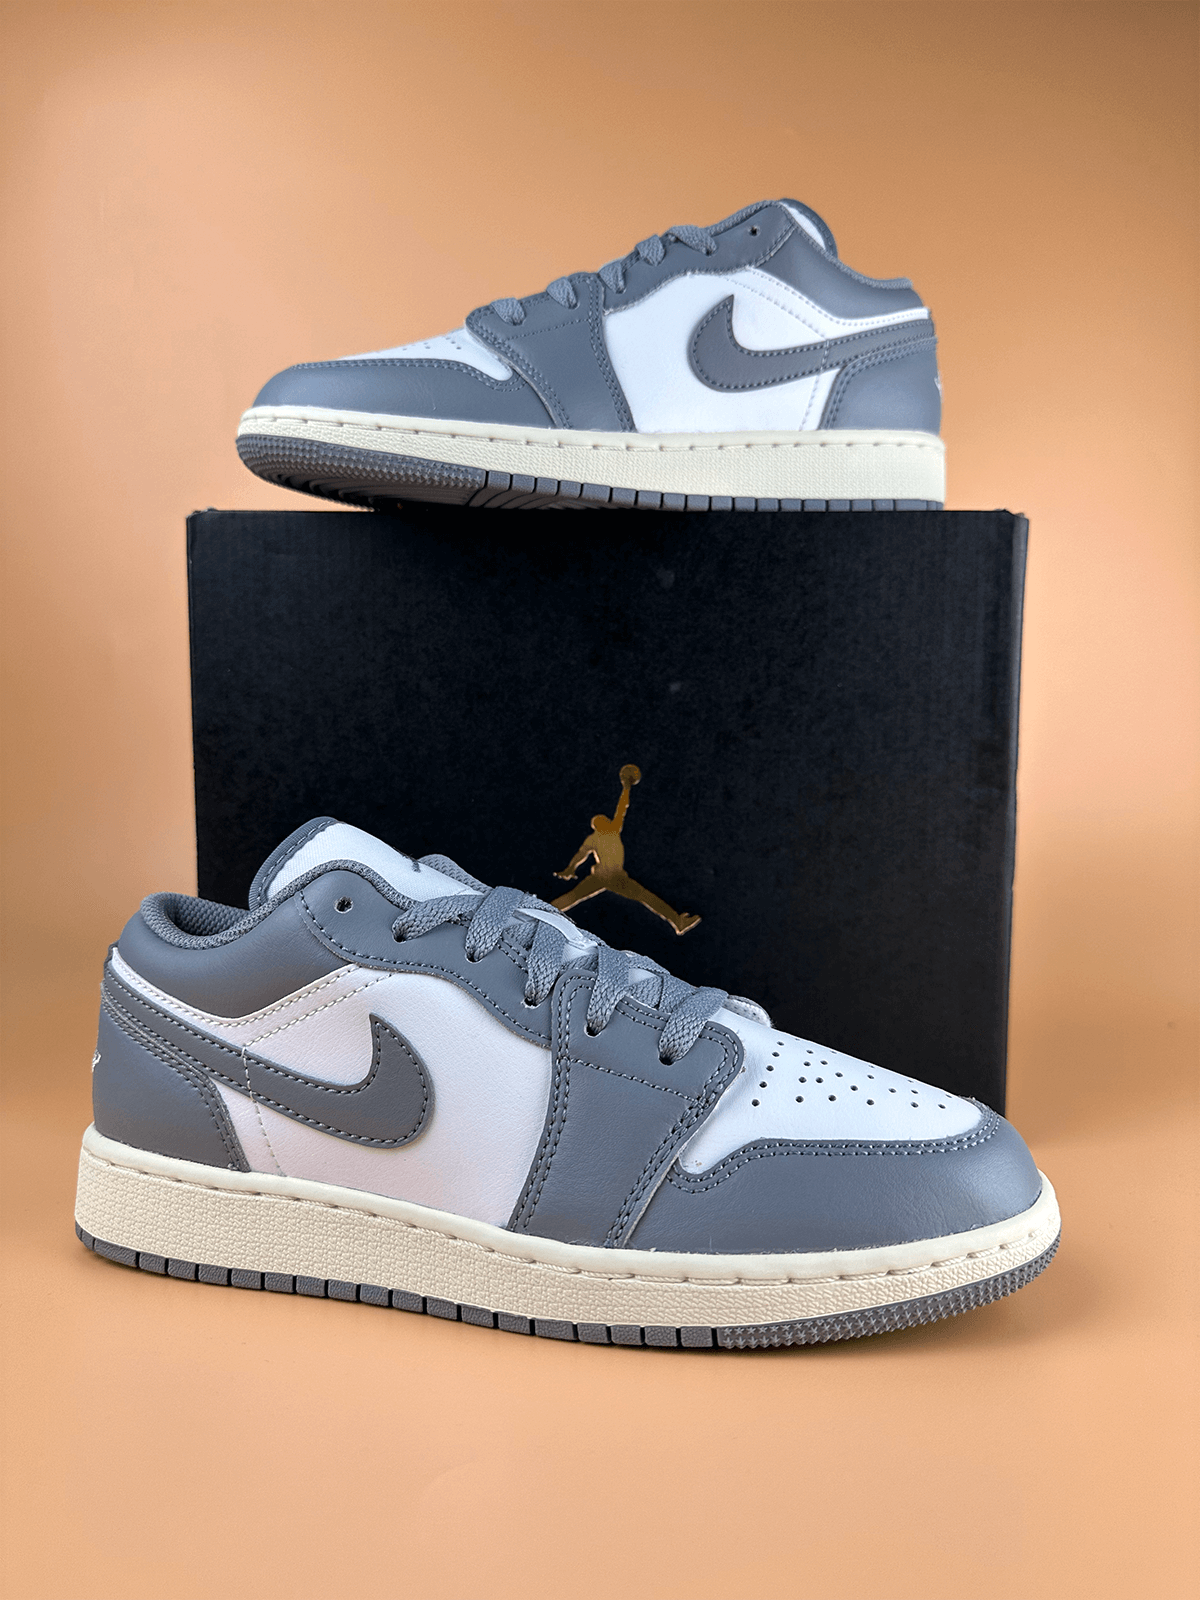 Jordan 1 Low Vintage Grey